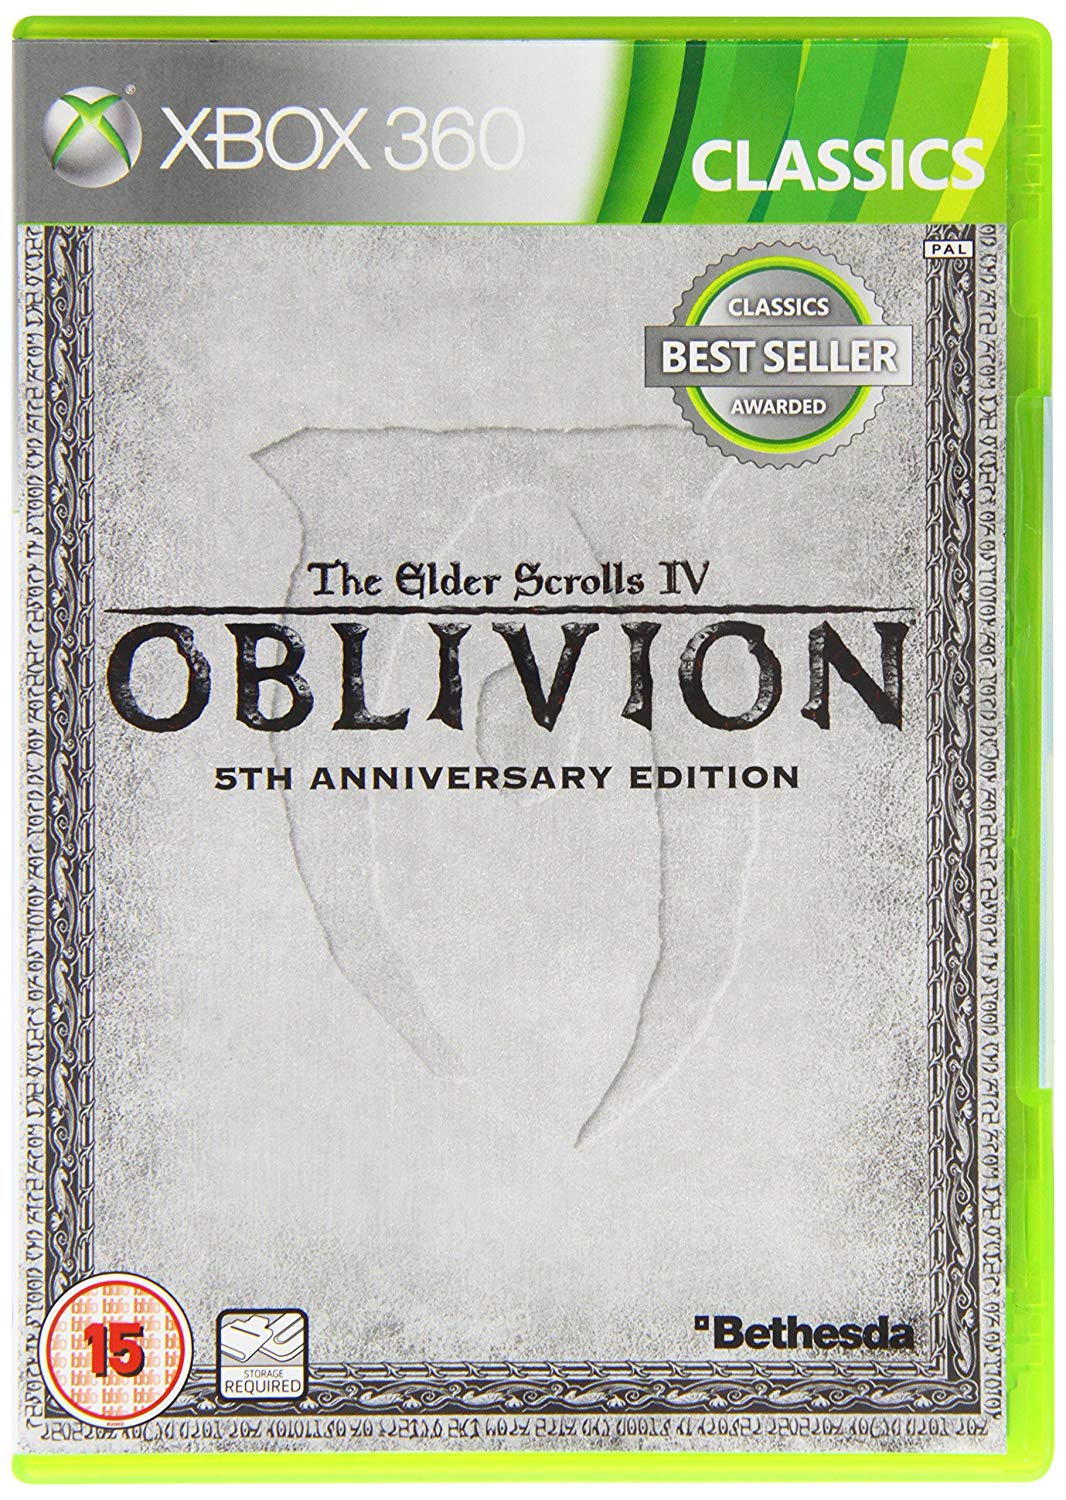 The Elder Scrolls IV Oblivion 5th Anniversary Edition